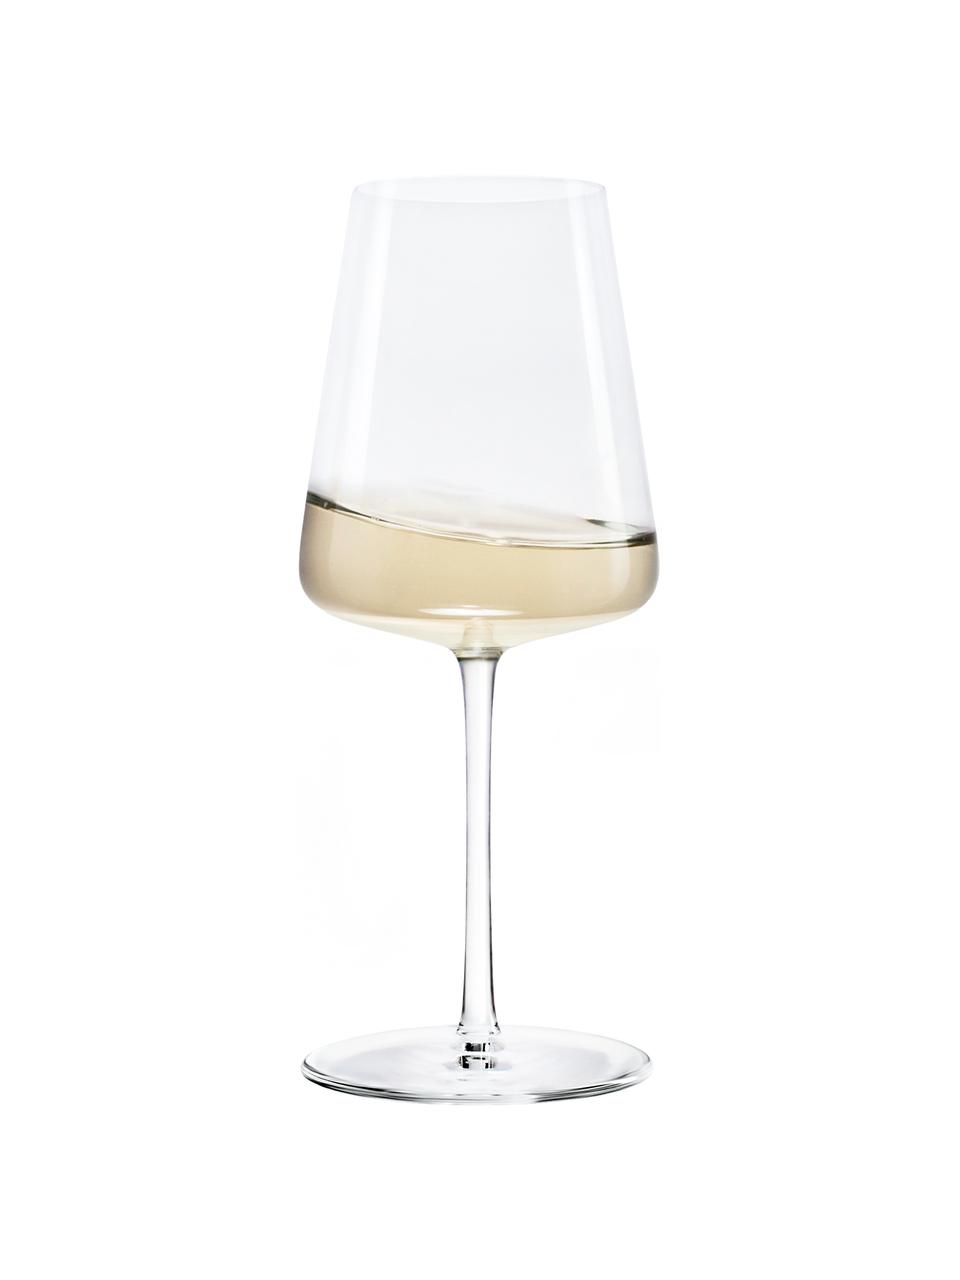 verre verre Verres à vin en plastique verre verres à vin personnalisable verres à vin bleu cristal Blanc verre de vin 